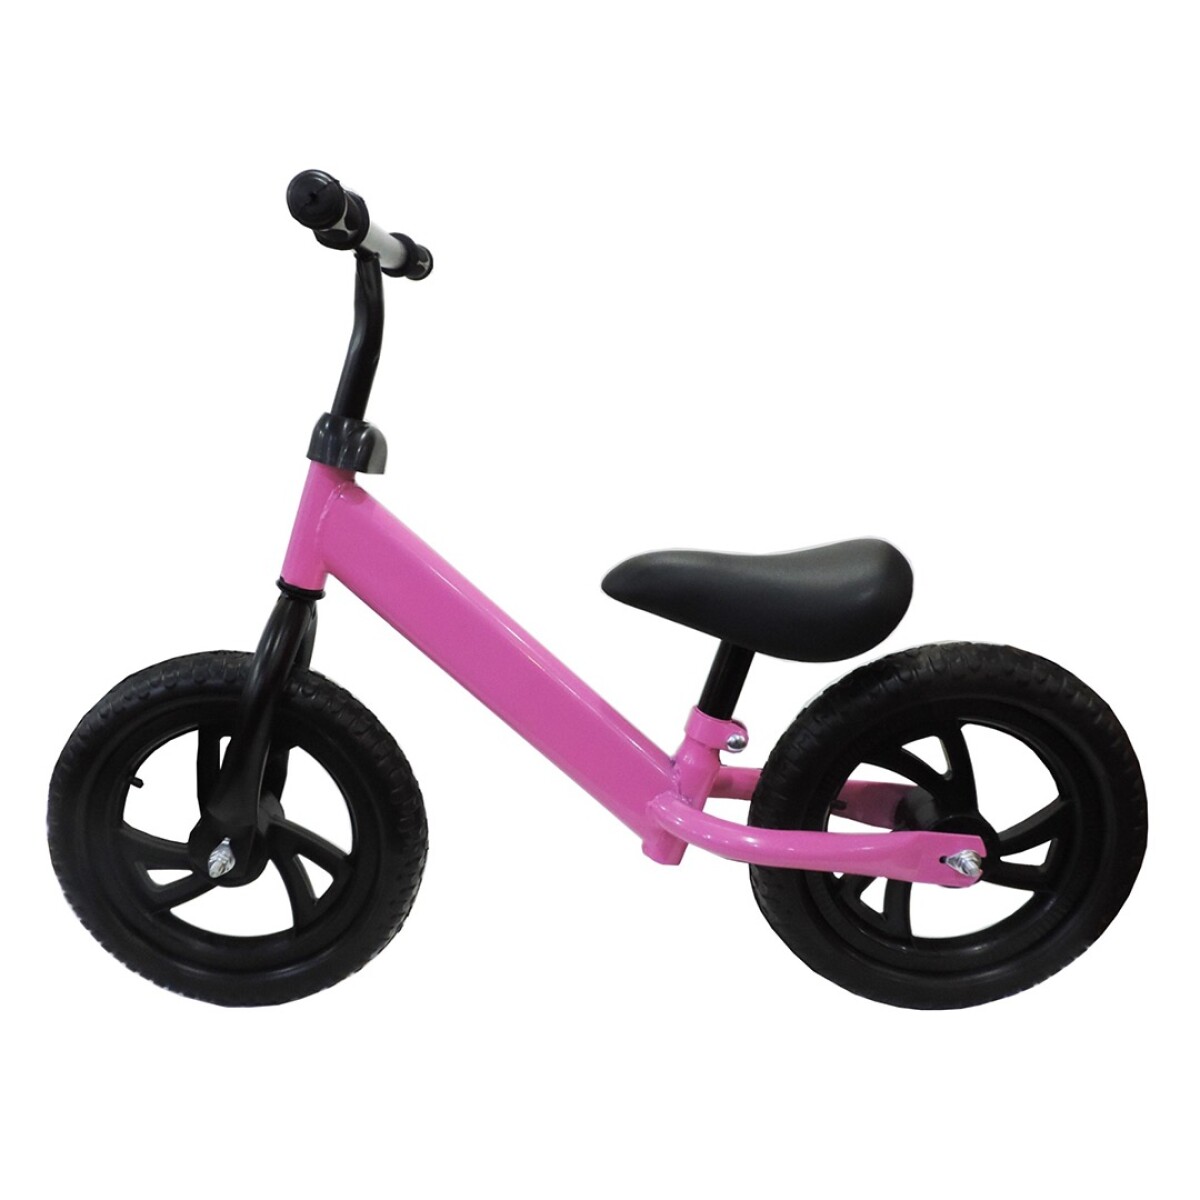 Bicicleta infantil chivita sin pedal resistente color - ROSA 